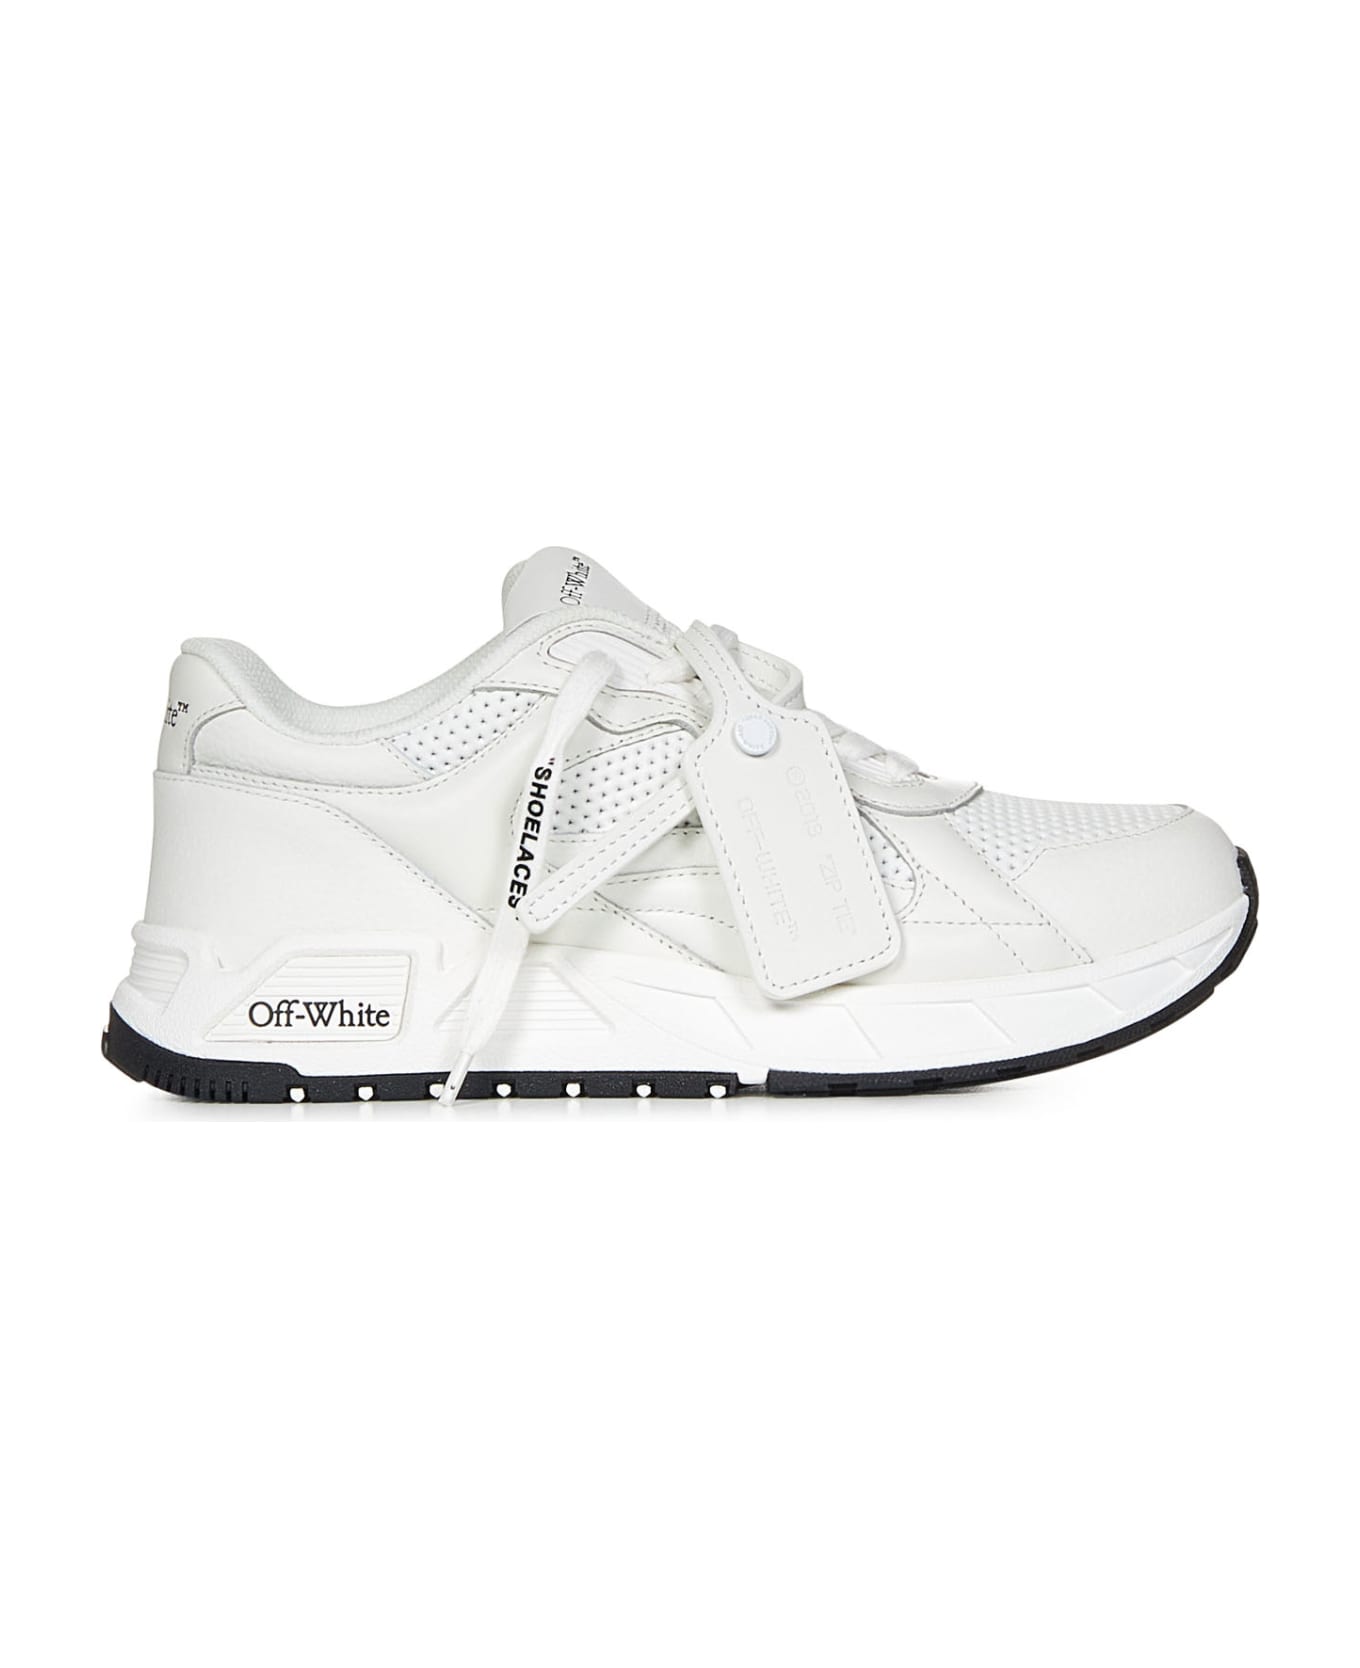 Off-White Kick Off Sneakers - White スニーカー